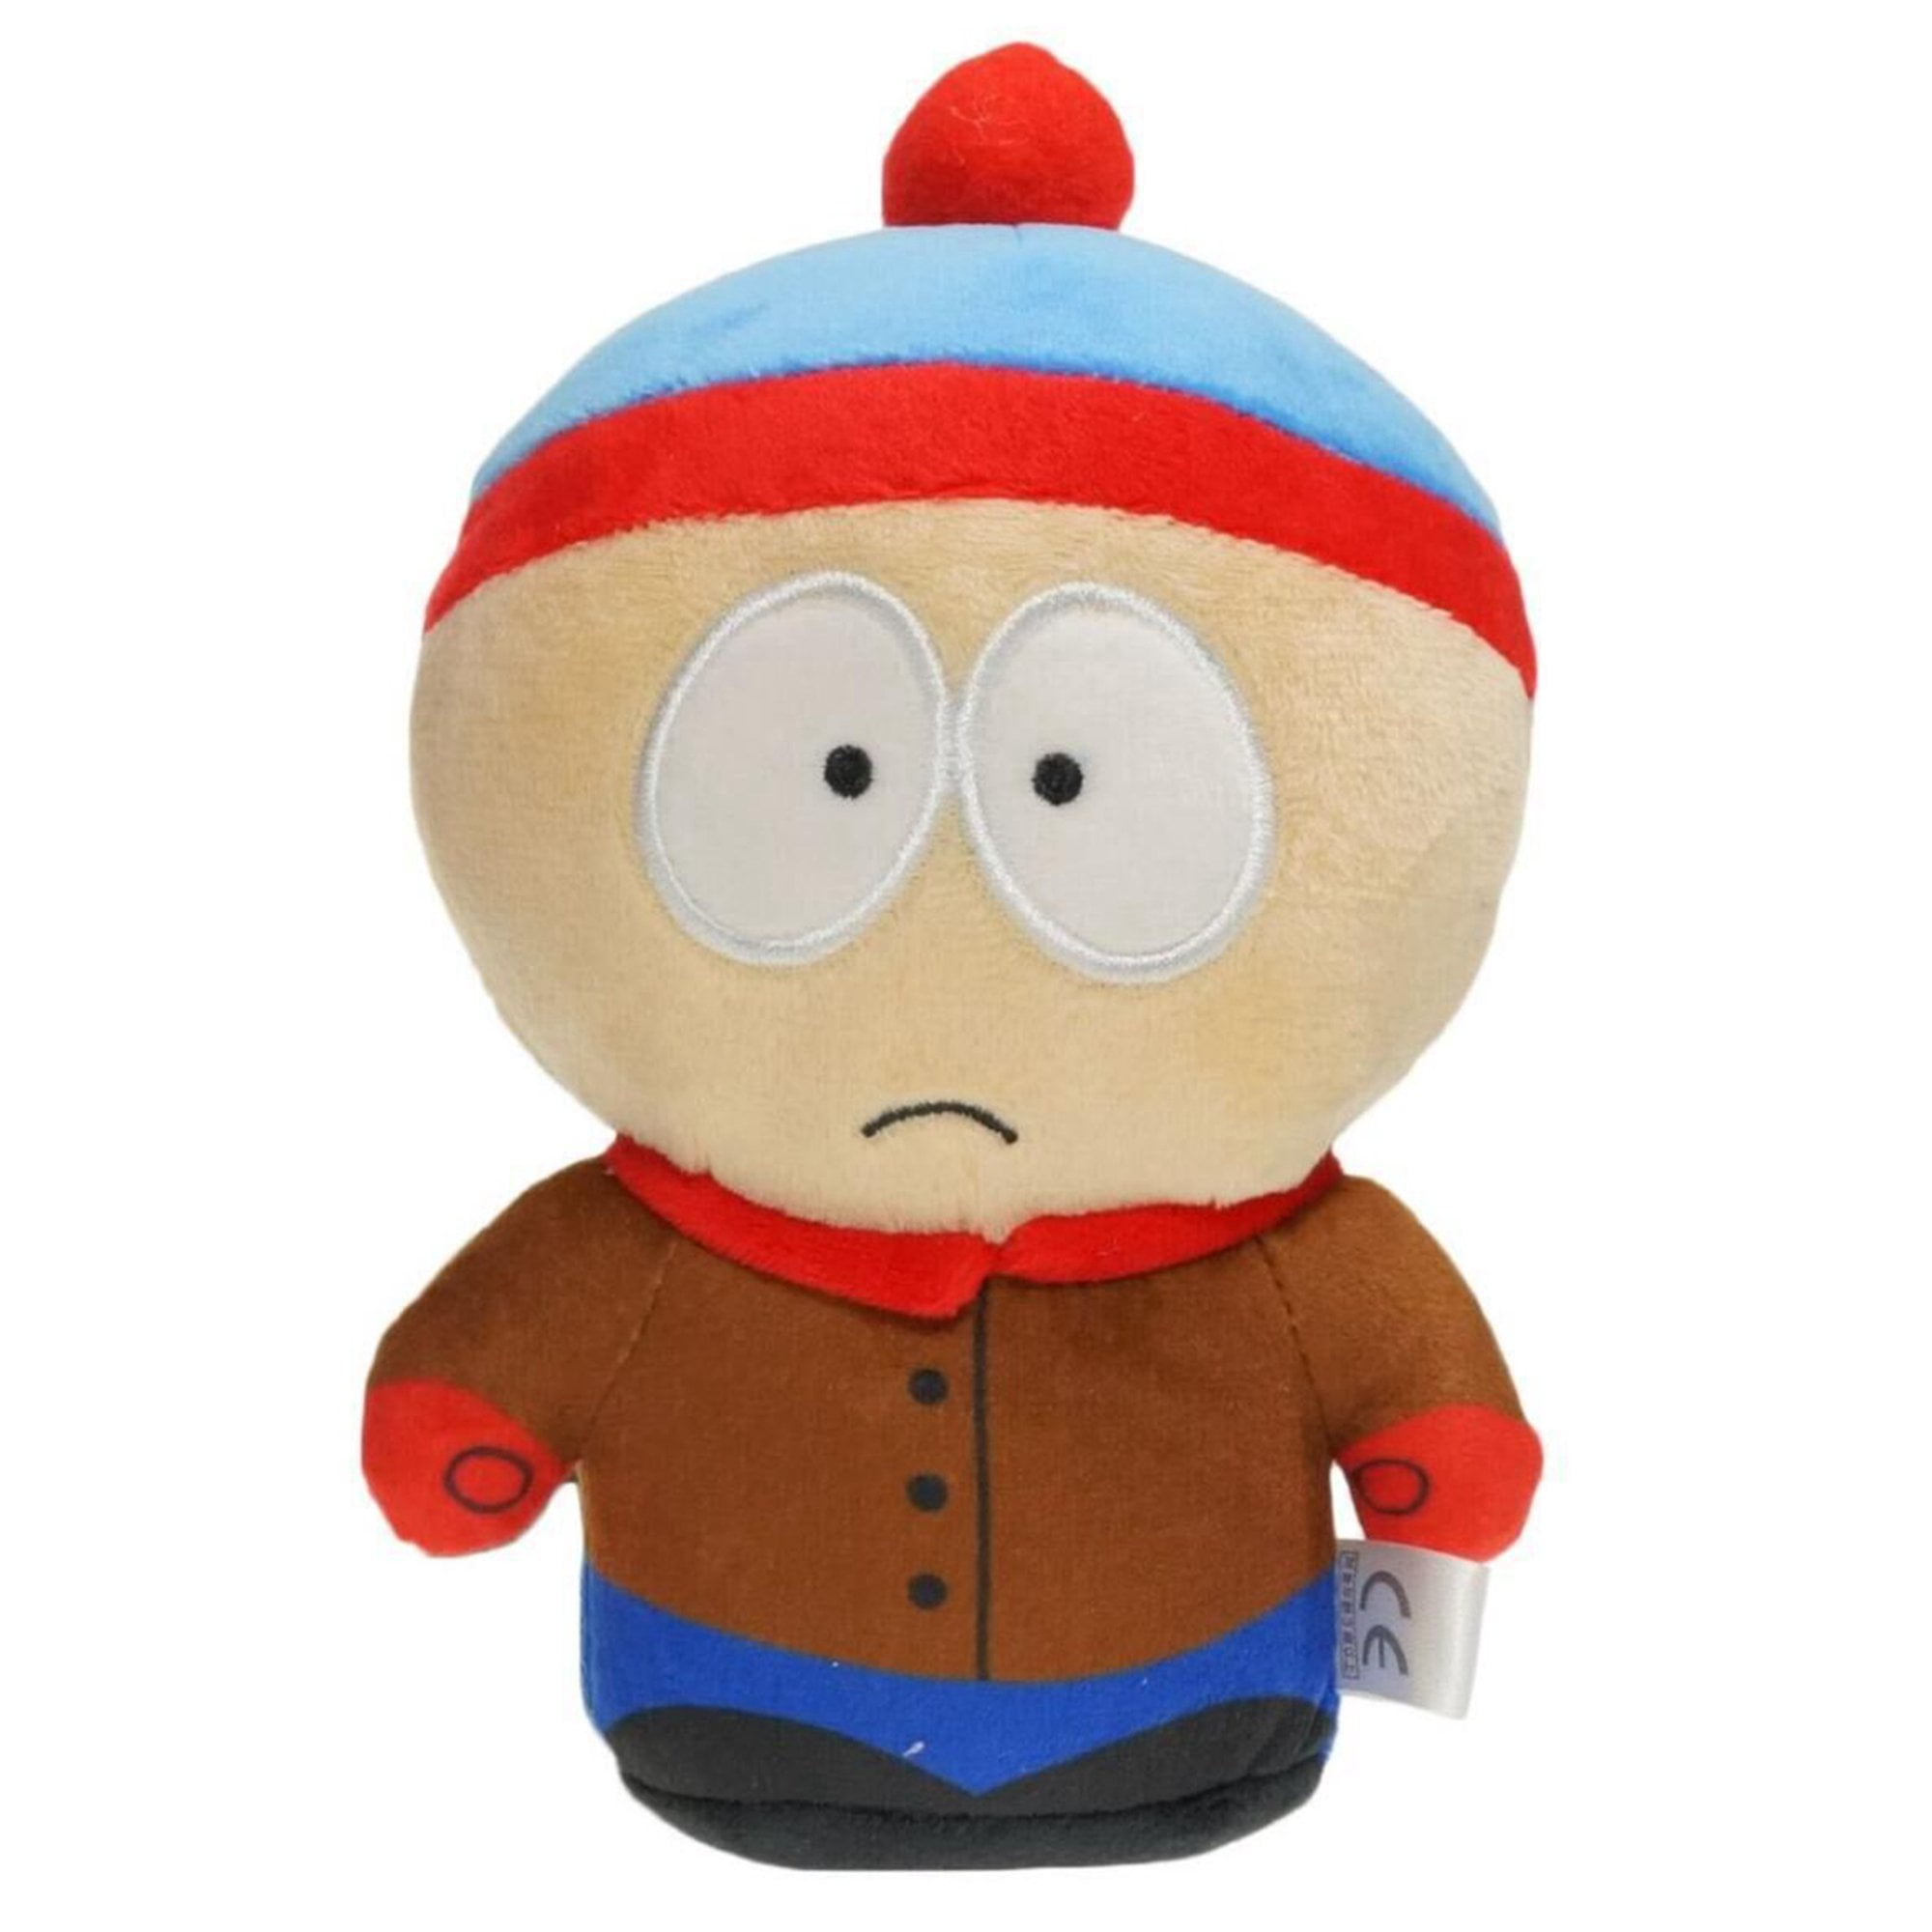 South Park Toys, Art Figures & Collectibles - Kidrobot